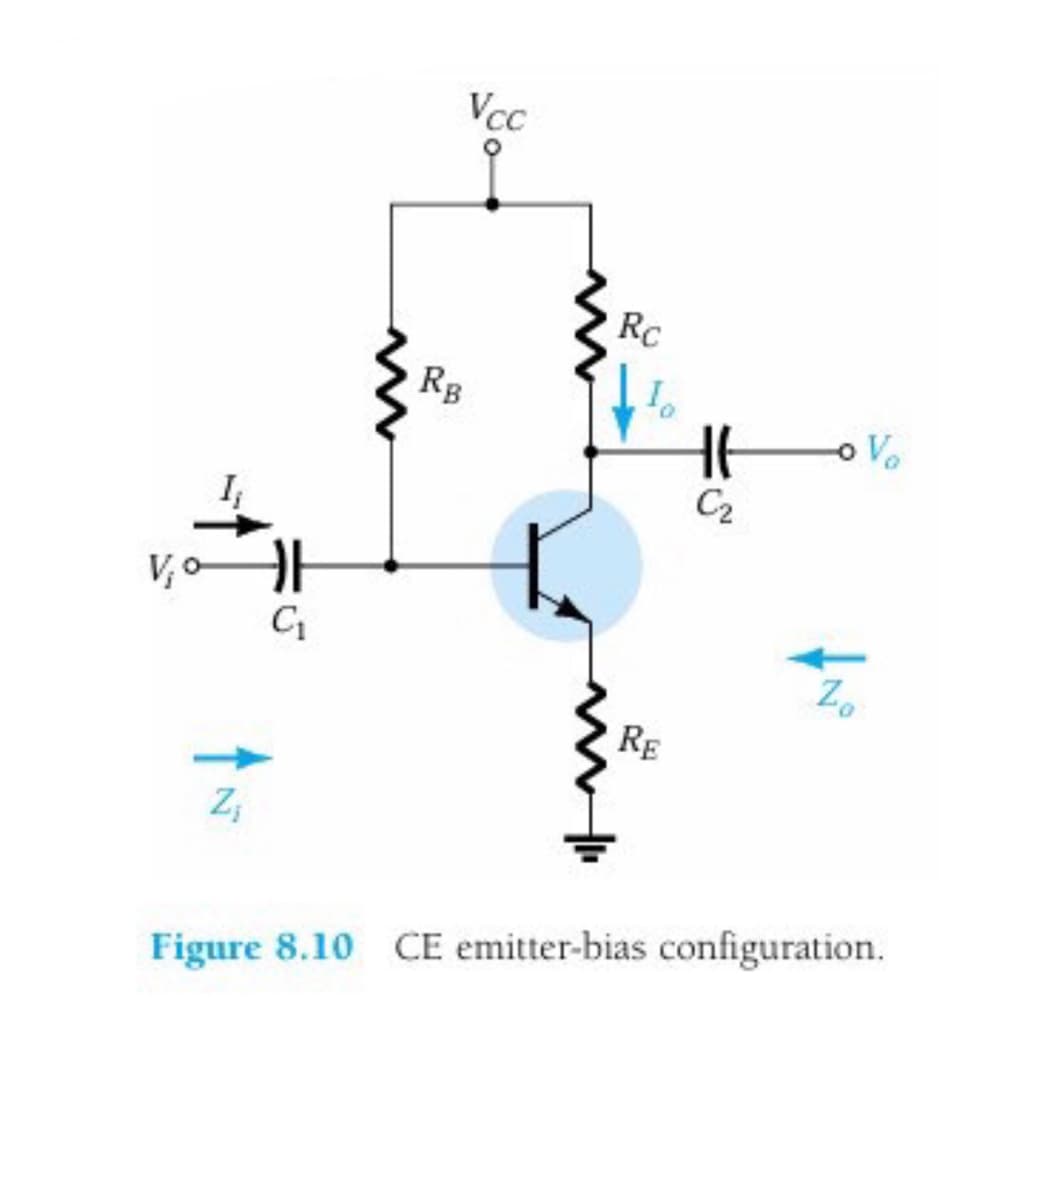 ww
Vcc
RB
Rc
HE
C₂
بی
Vo
ЭН
C₁
Zo
RE
Z₁
Figure 8.10 CE emitter-bias configuration.
V